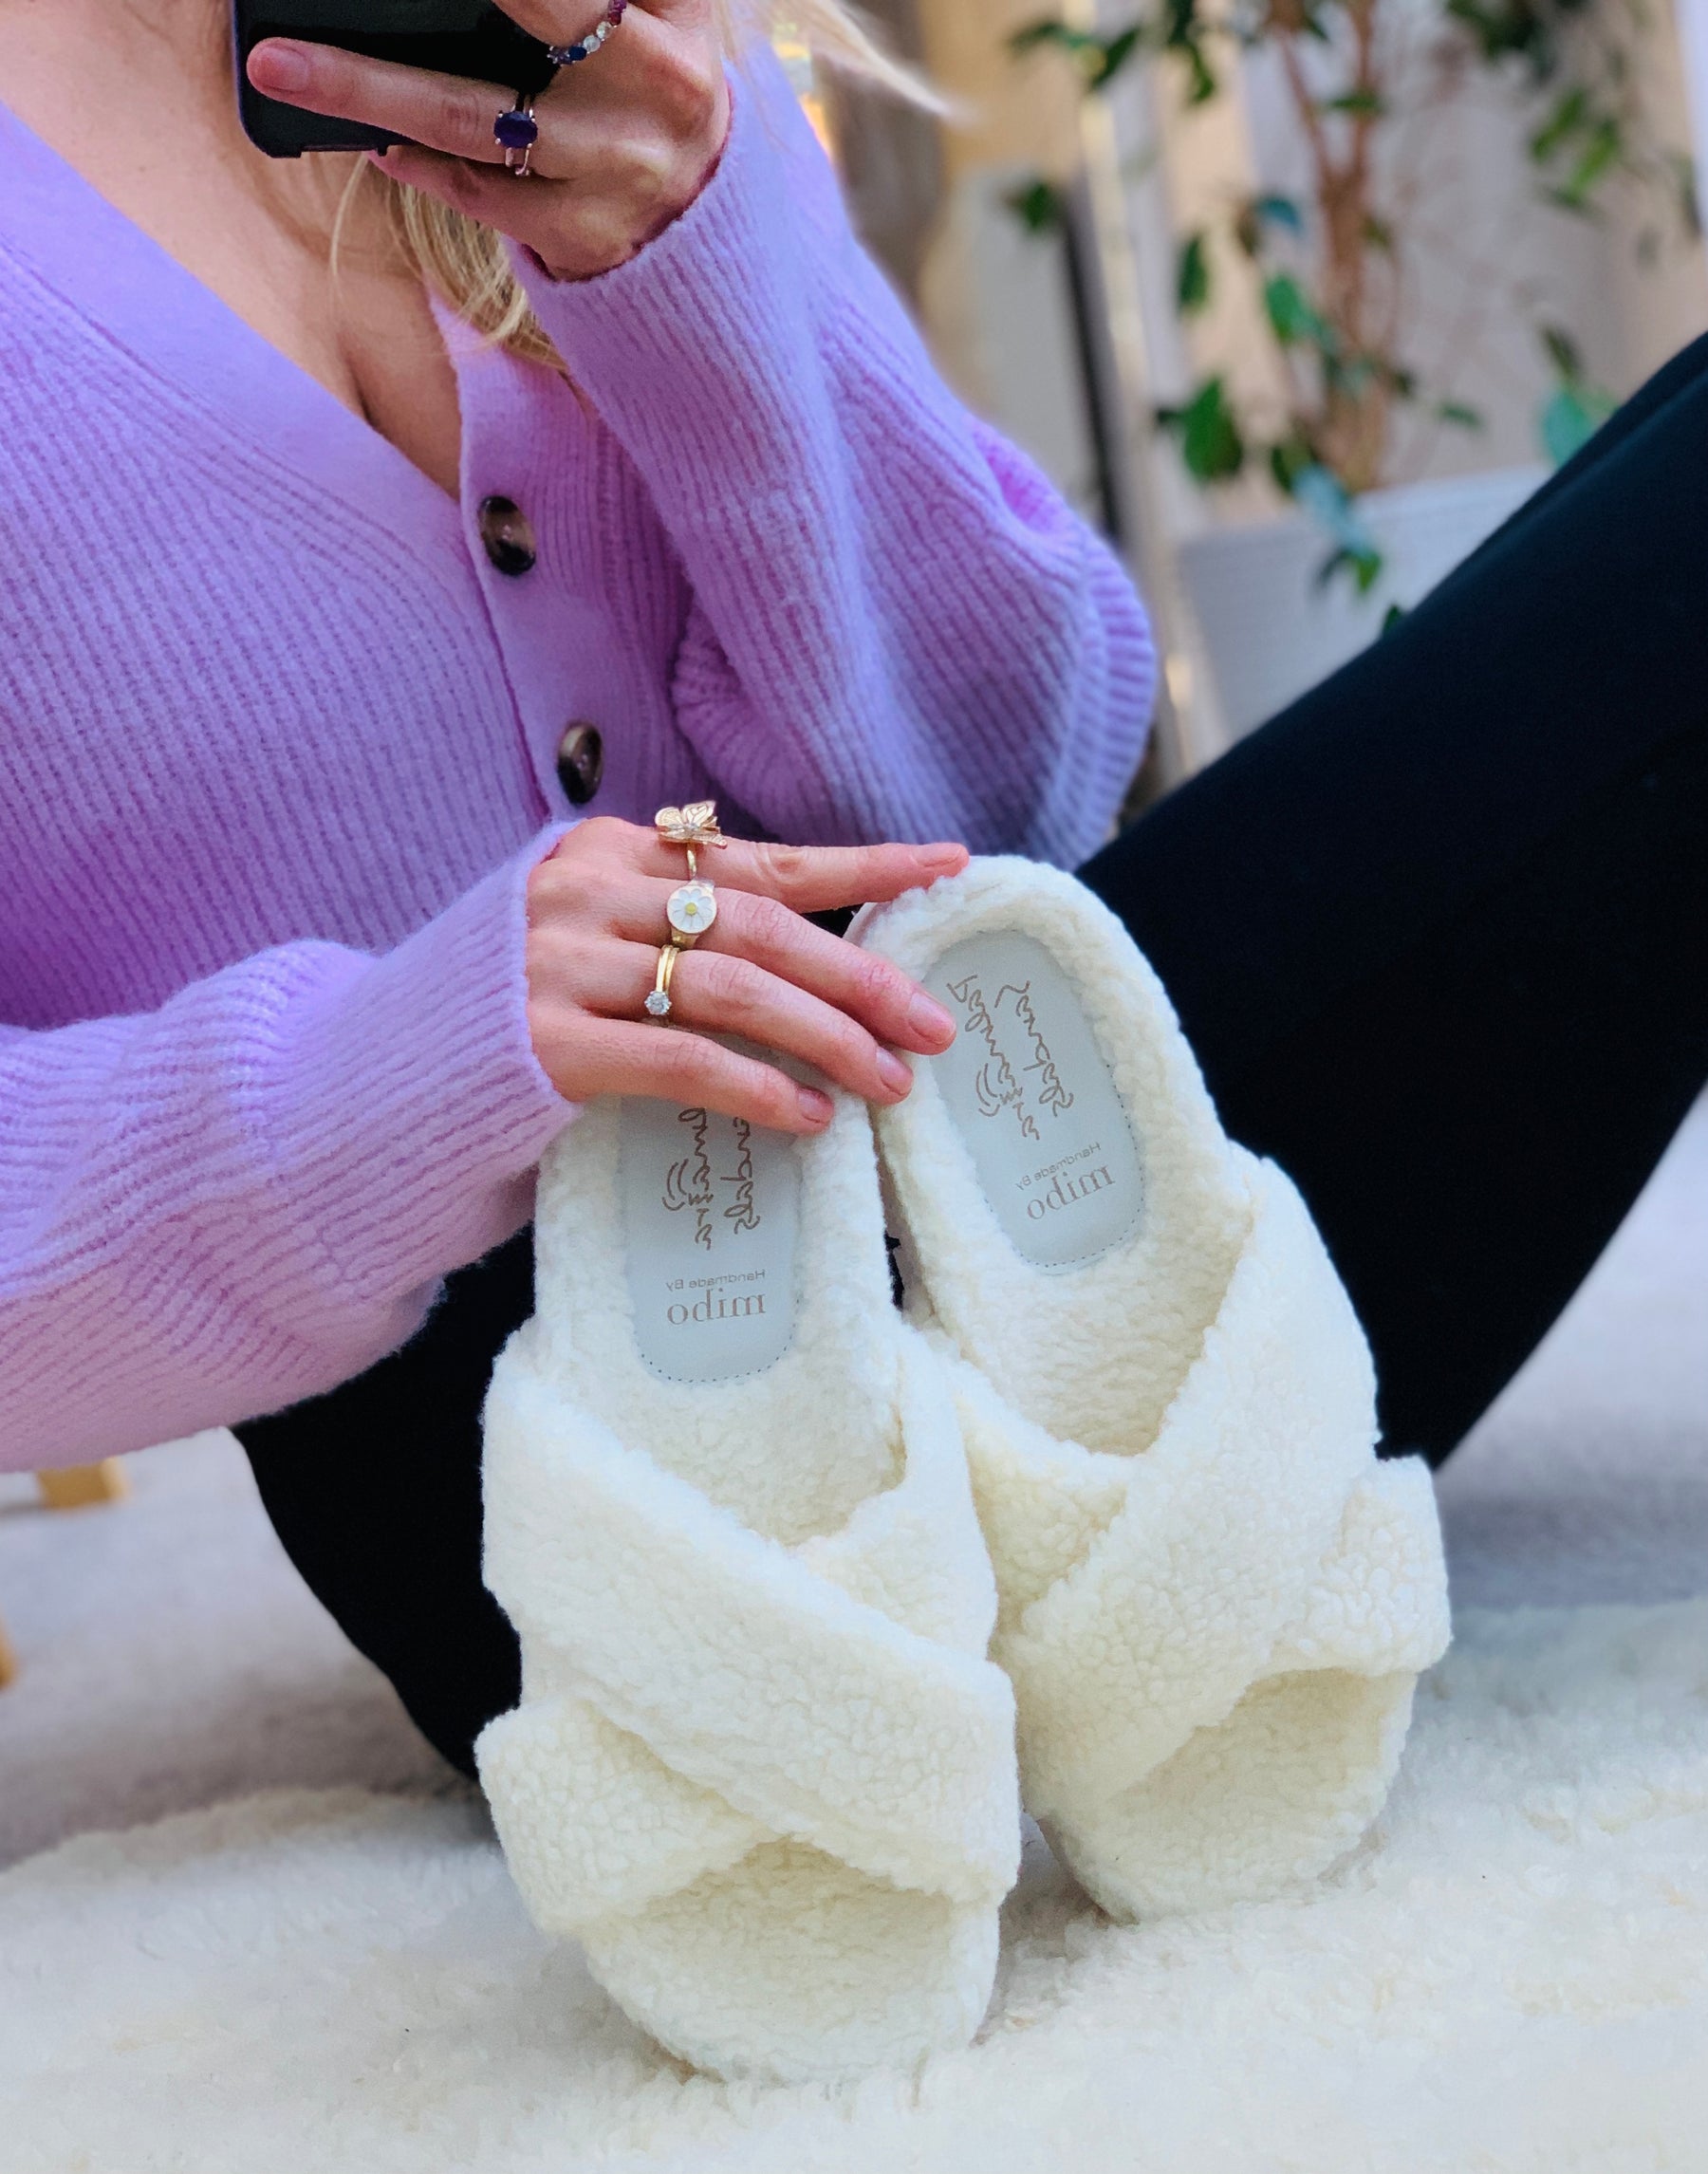 cream wool slide slip on slipper with arch support